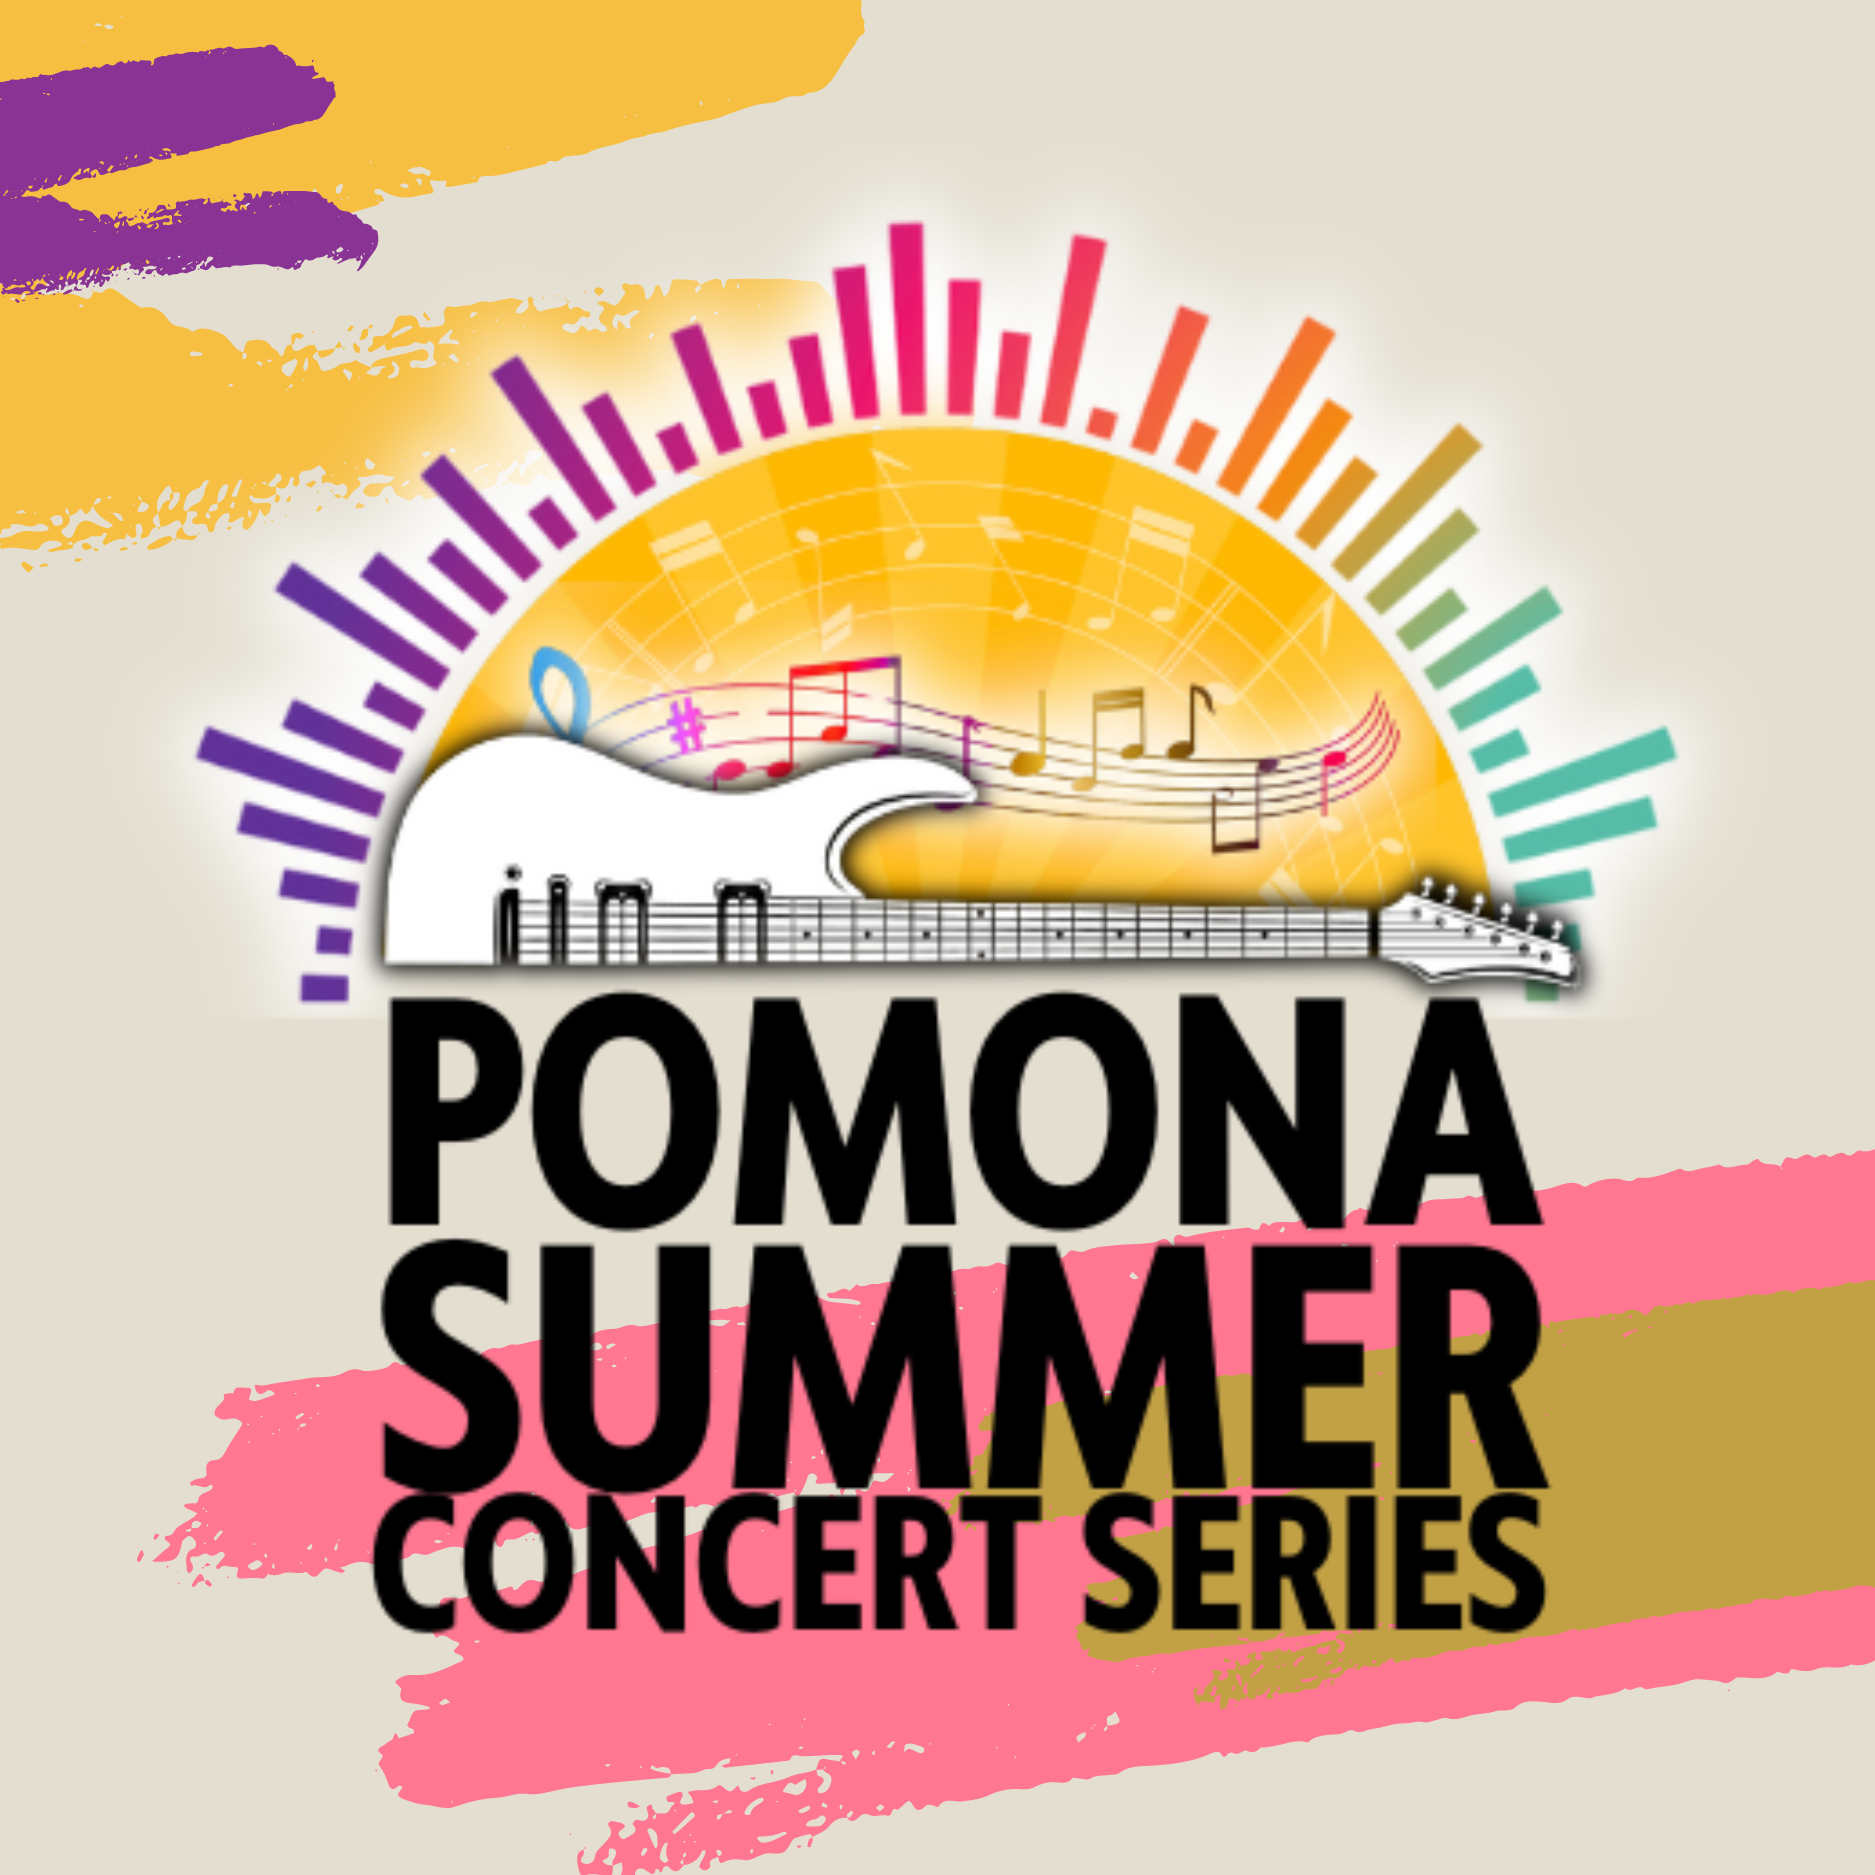 Photo of the Pomona Summer Concert Series logo